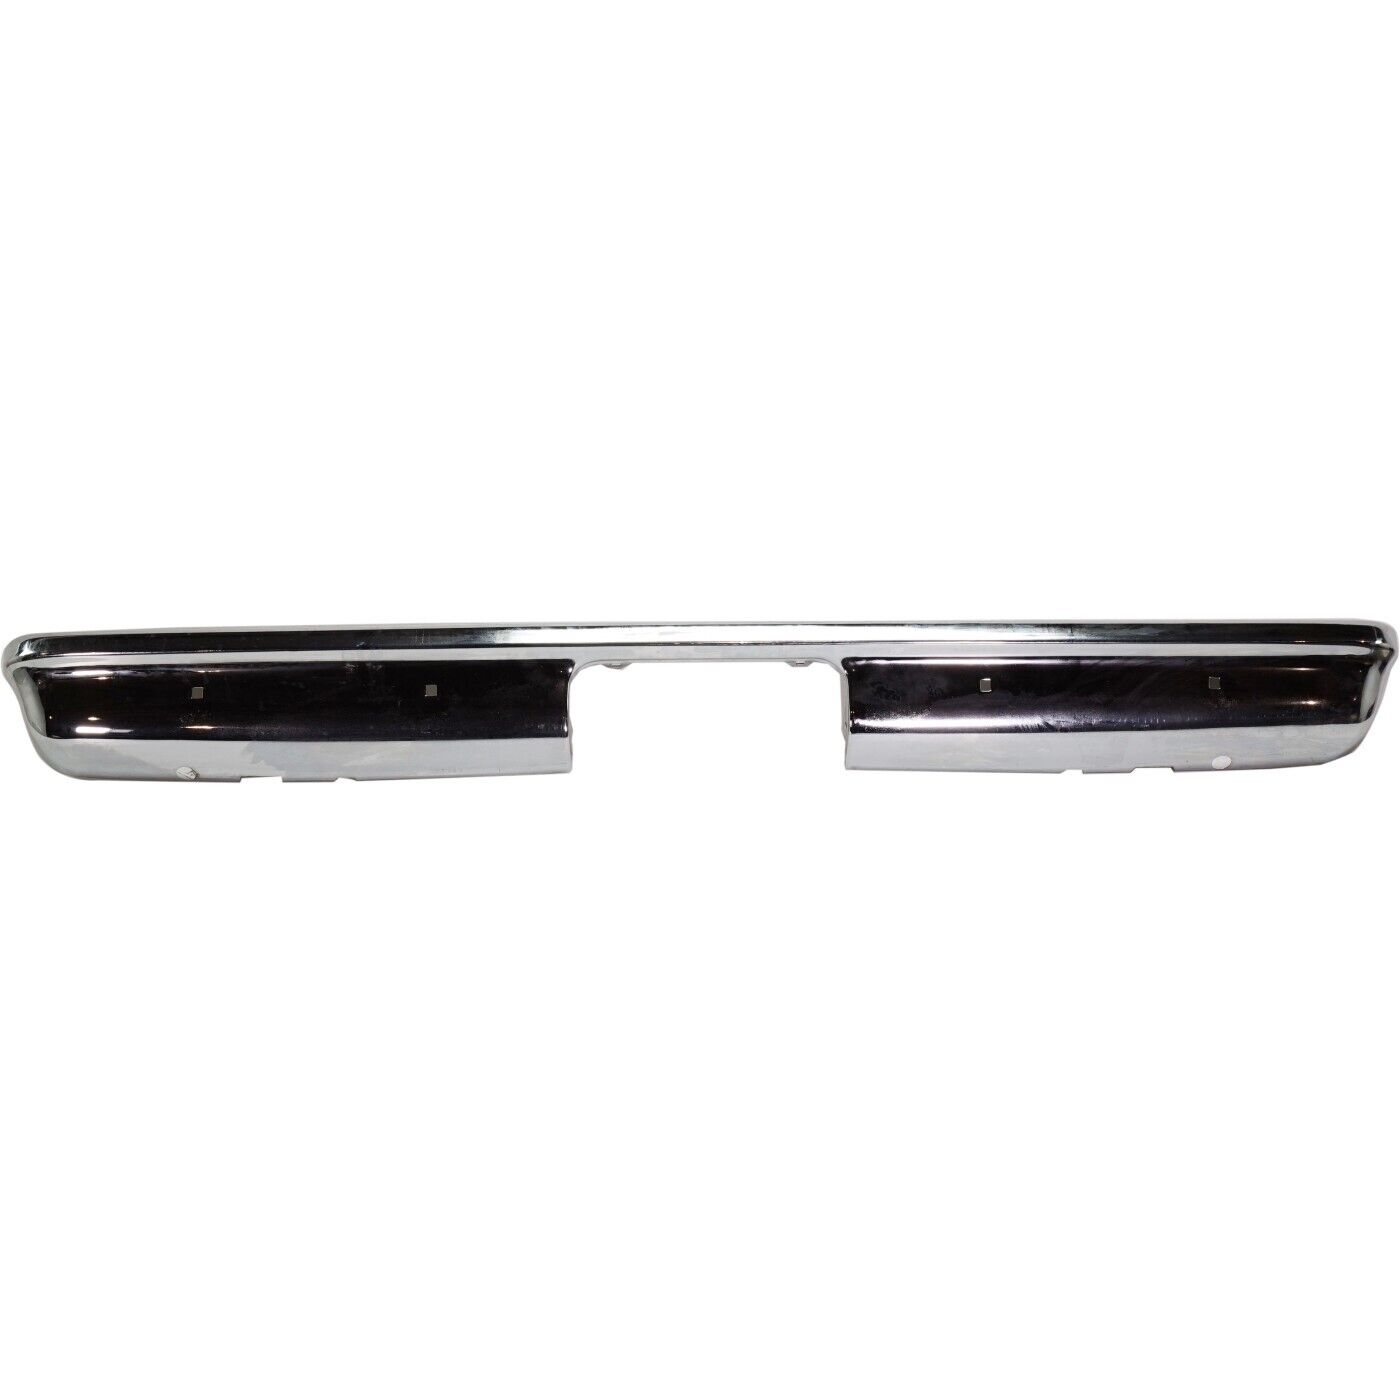 Rear Bumper for 67-72 Chevrolet C10 Pickup 69-72 Blazer Chrome Steel